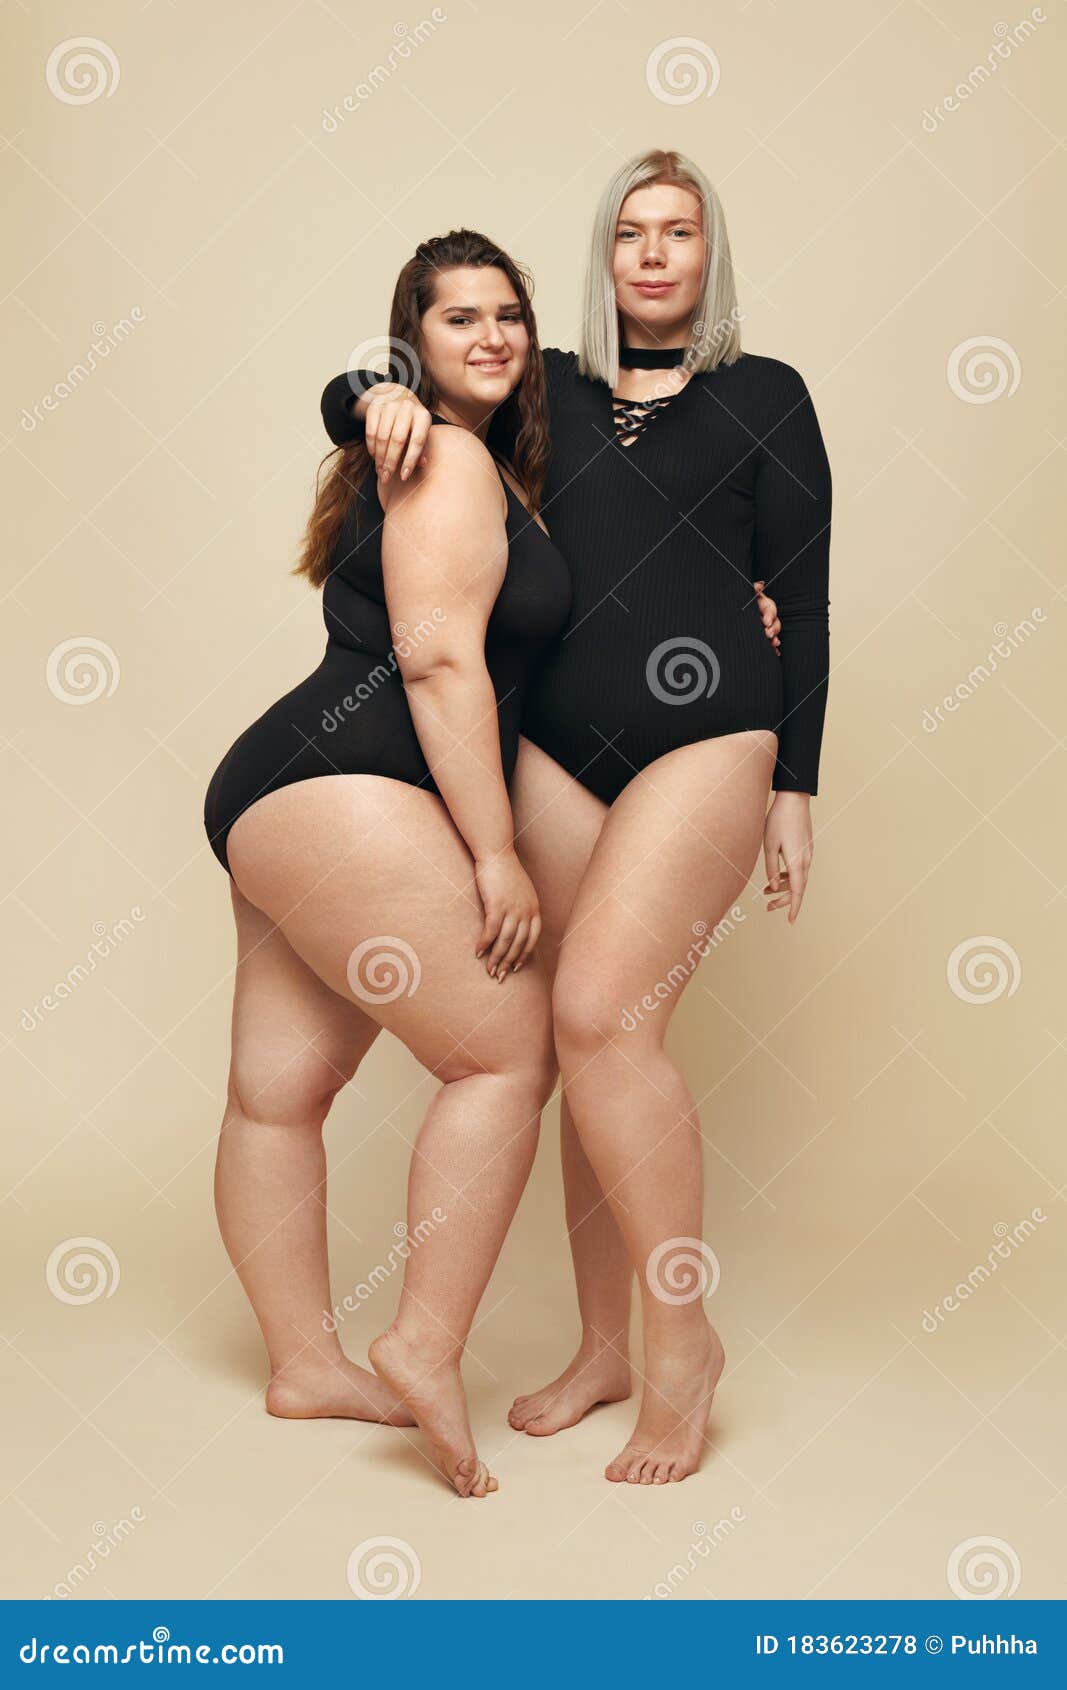 Plus Size Models. Full-figured Women Full-length Portrait. Brunette and  Blonde in Black Bodysuits Posing on Beige Background Stock Photo - Image of  fashion, female: 183623278